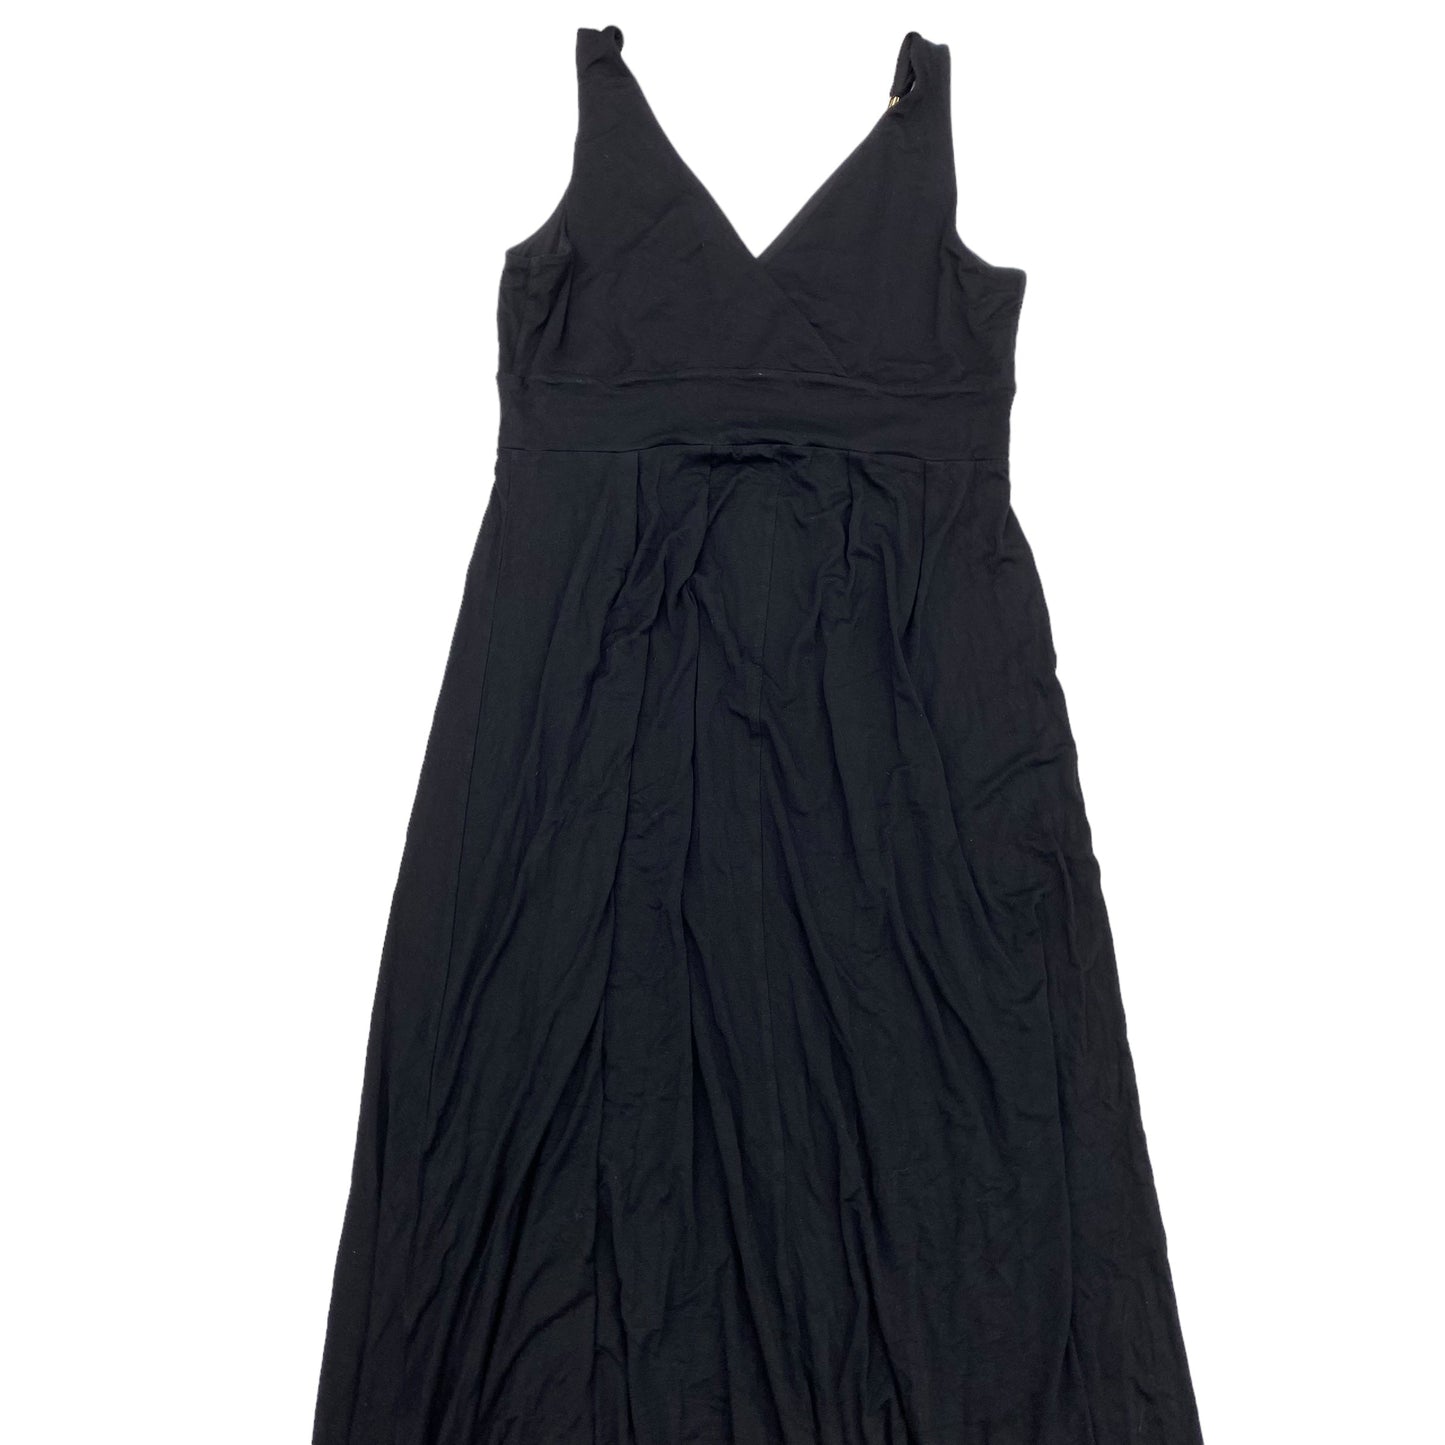 BLACK DRESS CASUAL MAXI by JENNIFER LOPEZ Size:XL